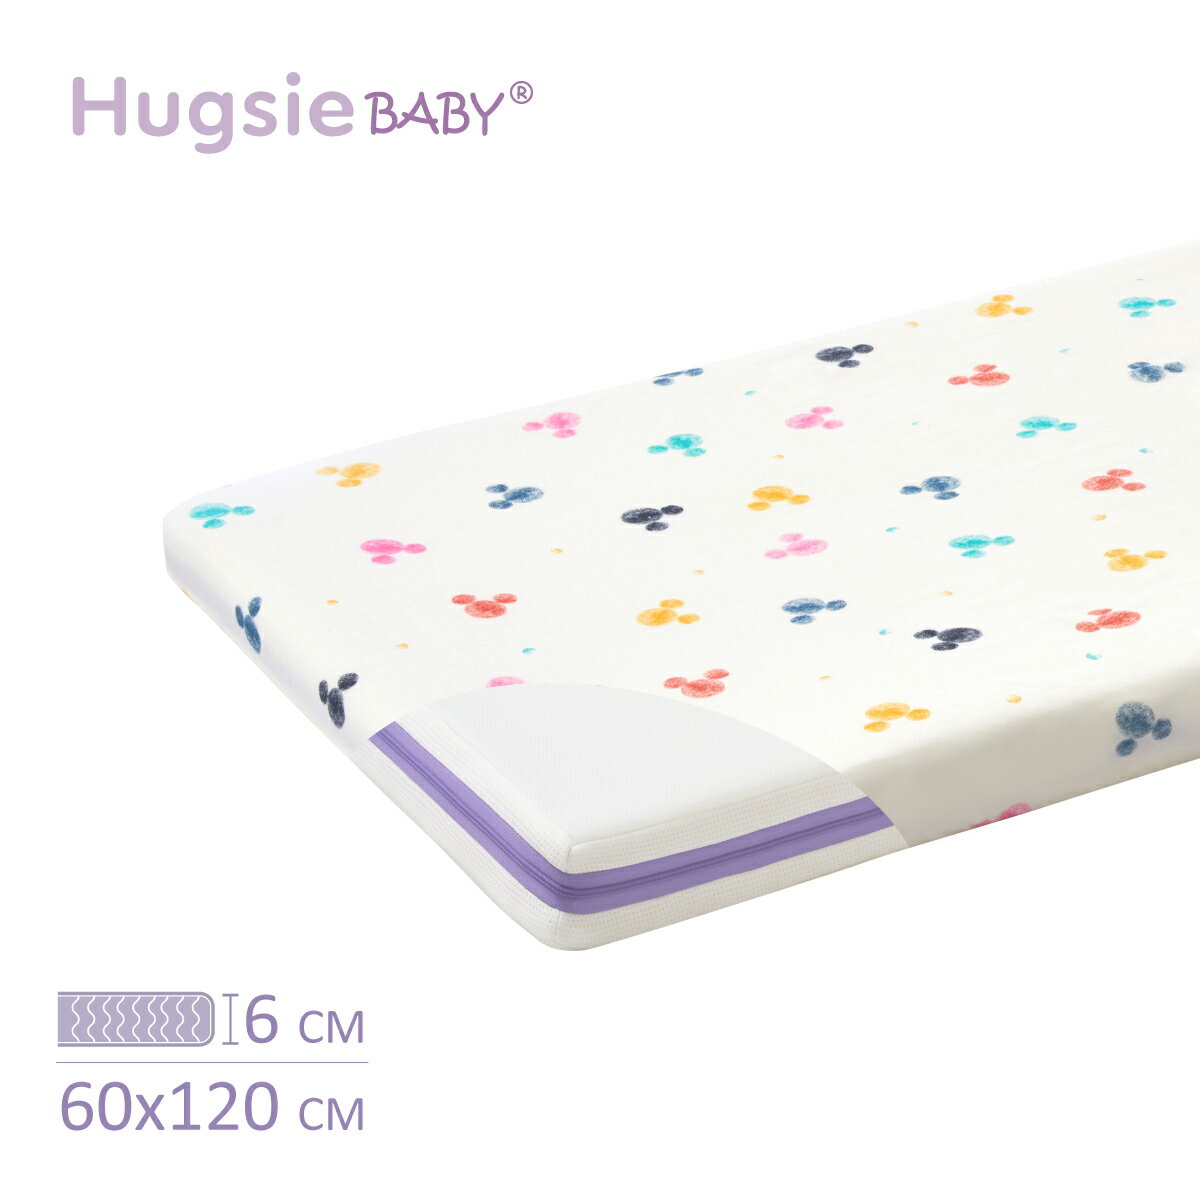 HugsieBABY迪士尼系列透氣水洗嬰兒床墊(附贈抗菌床單) 60×120★衛立兒生活館★